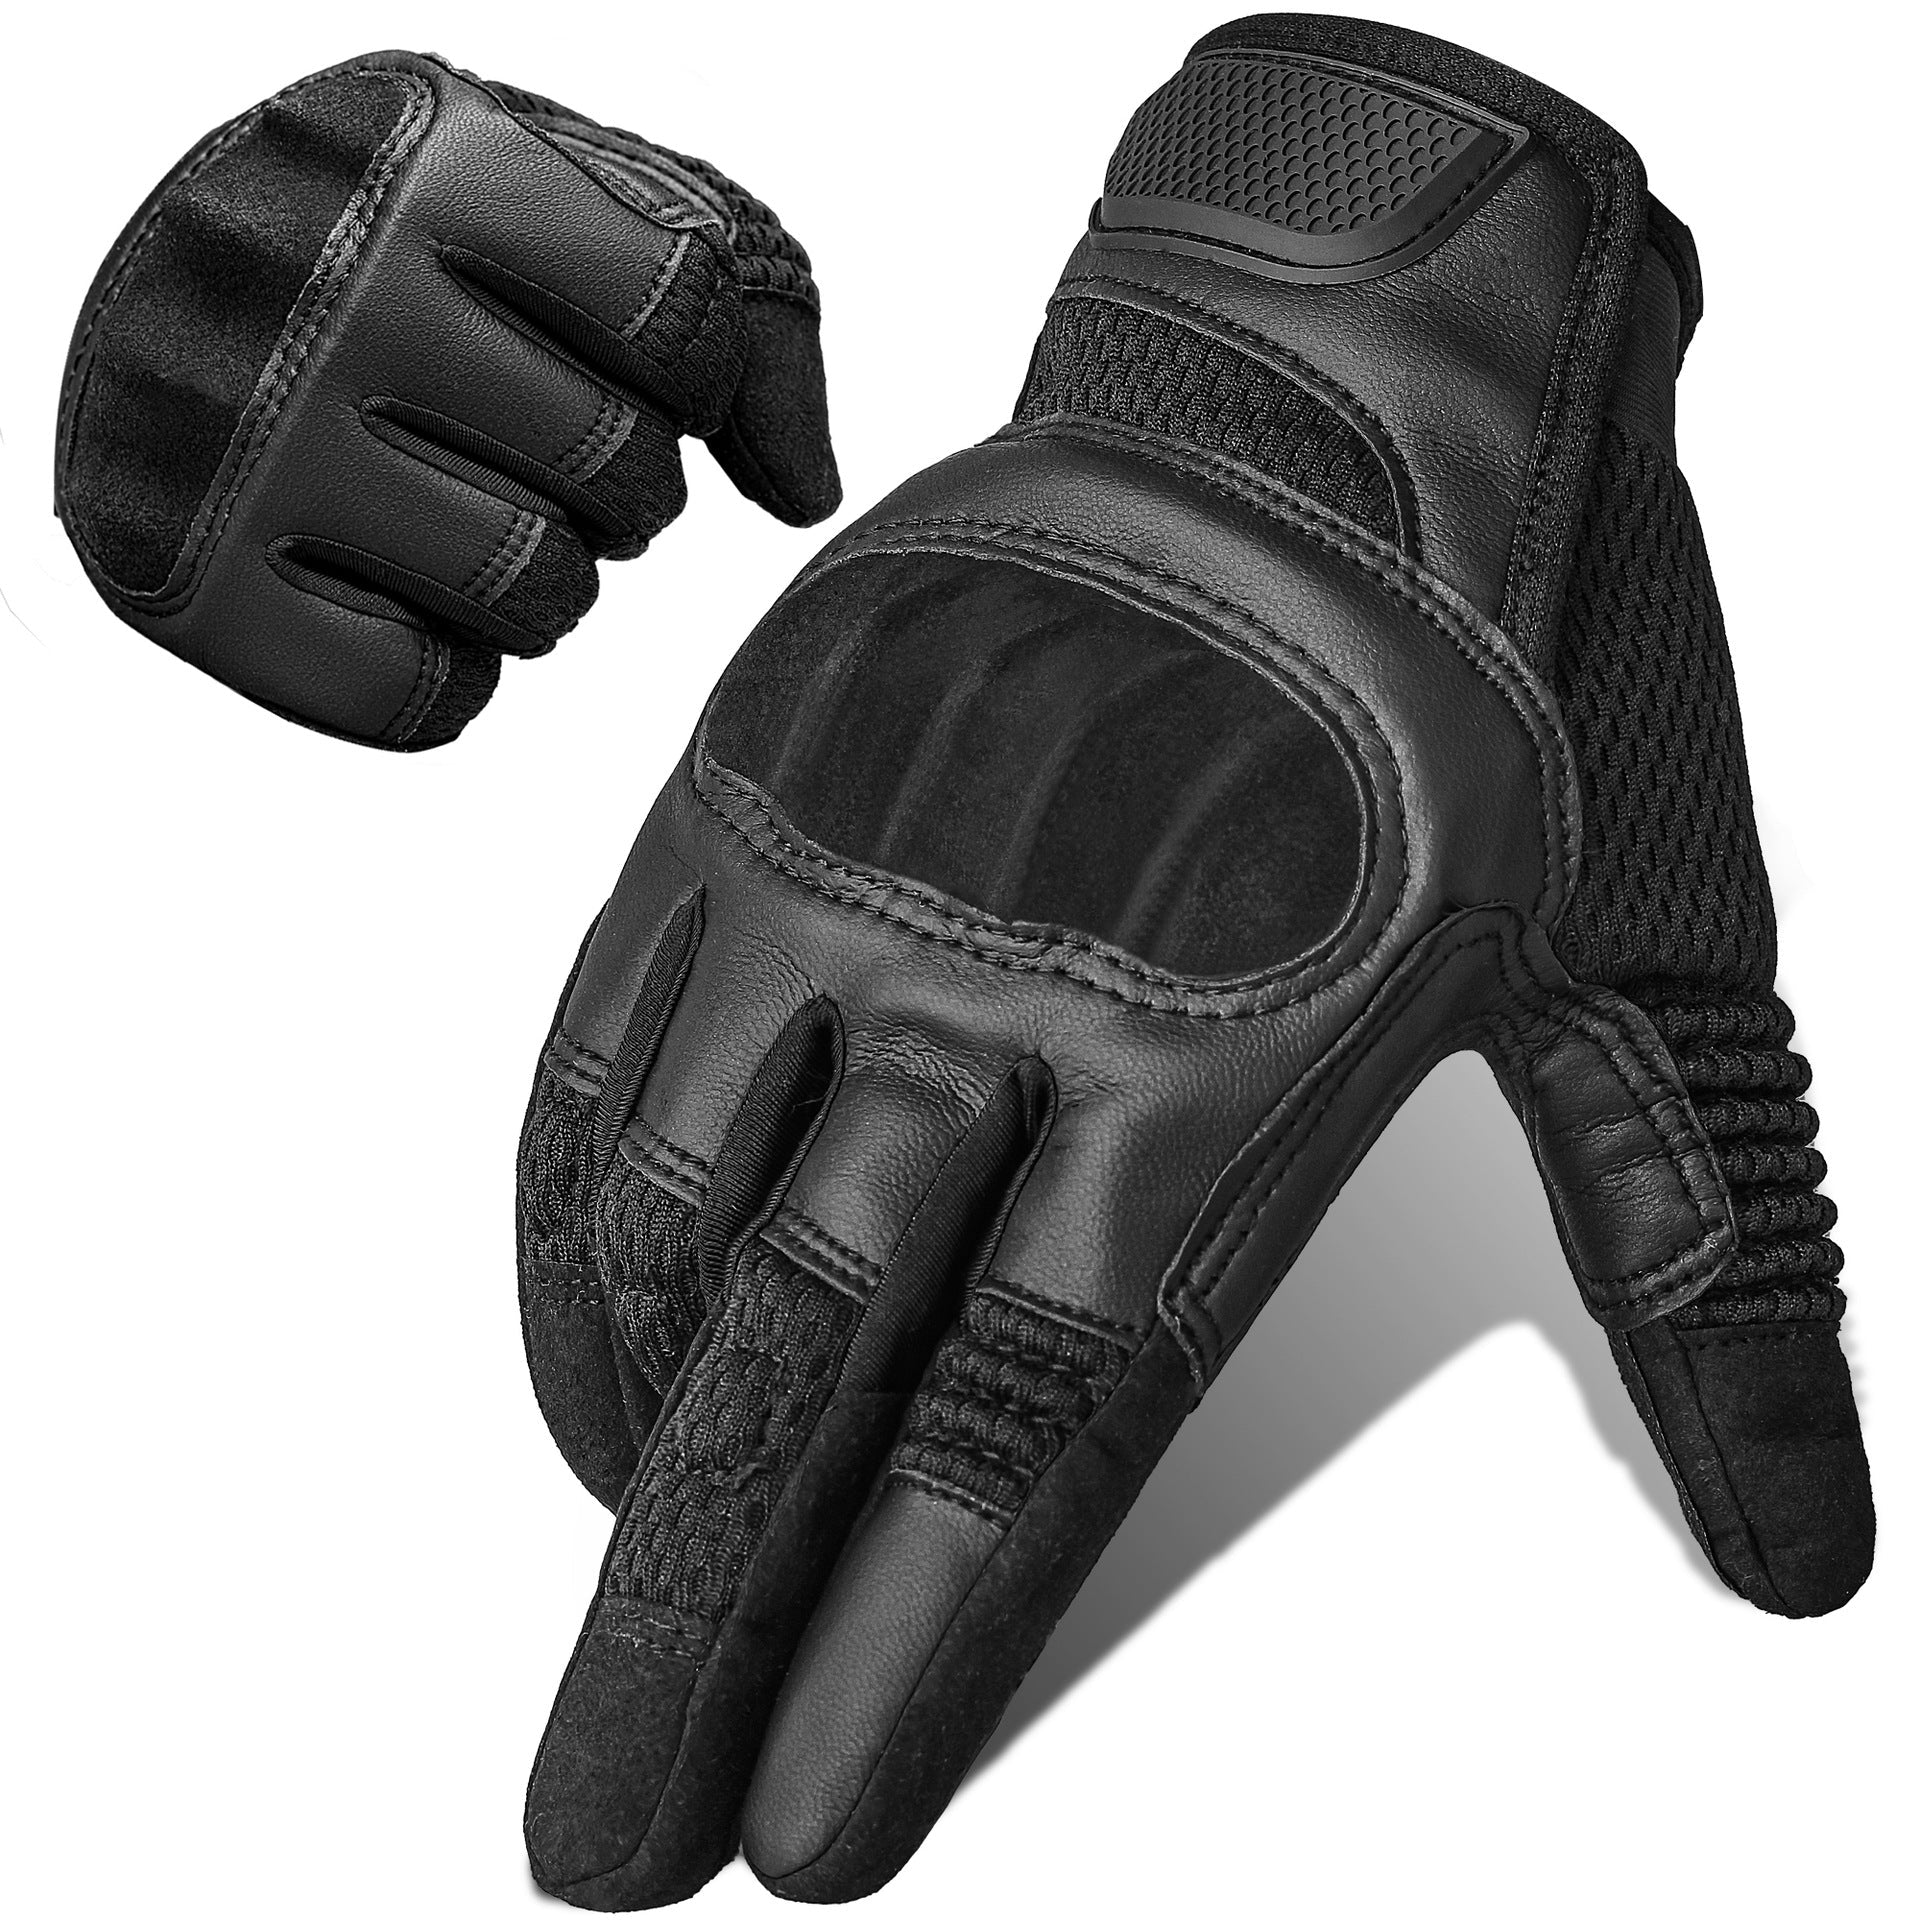 Outdoor Anti-Rutsch-Bergsteigen Klettern Touchscreen Reiten taktische Handschuhe